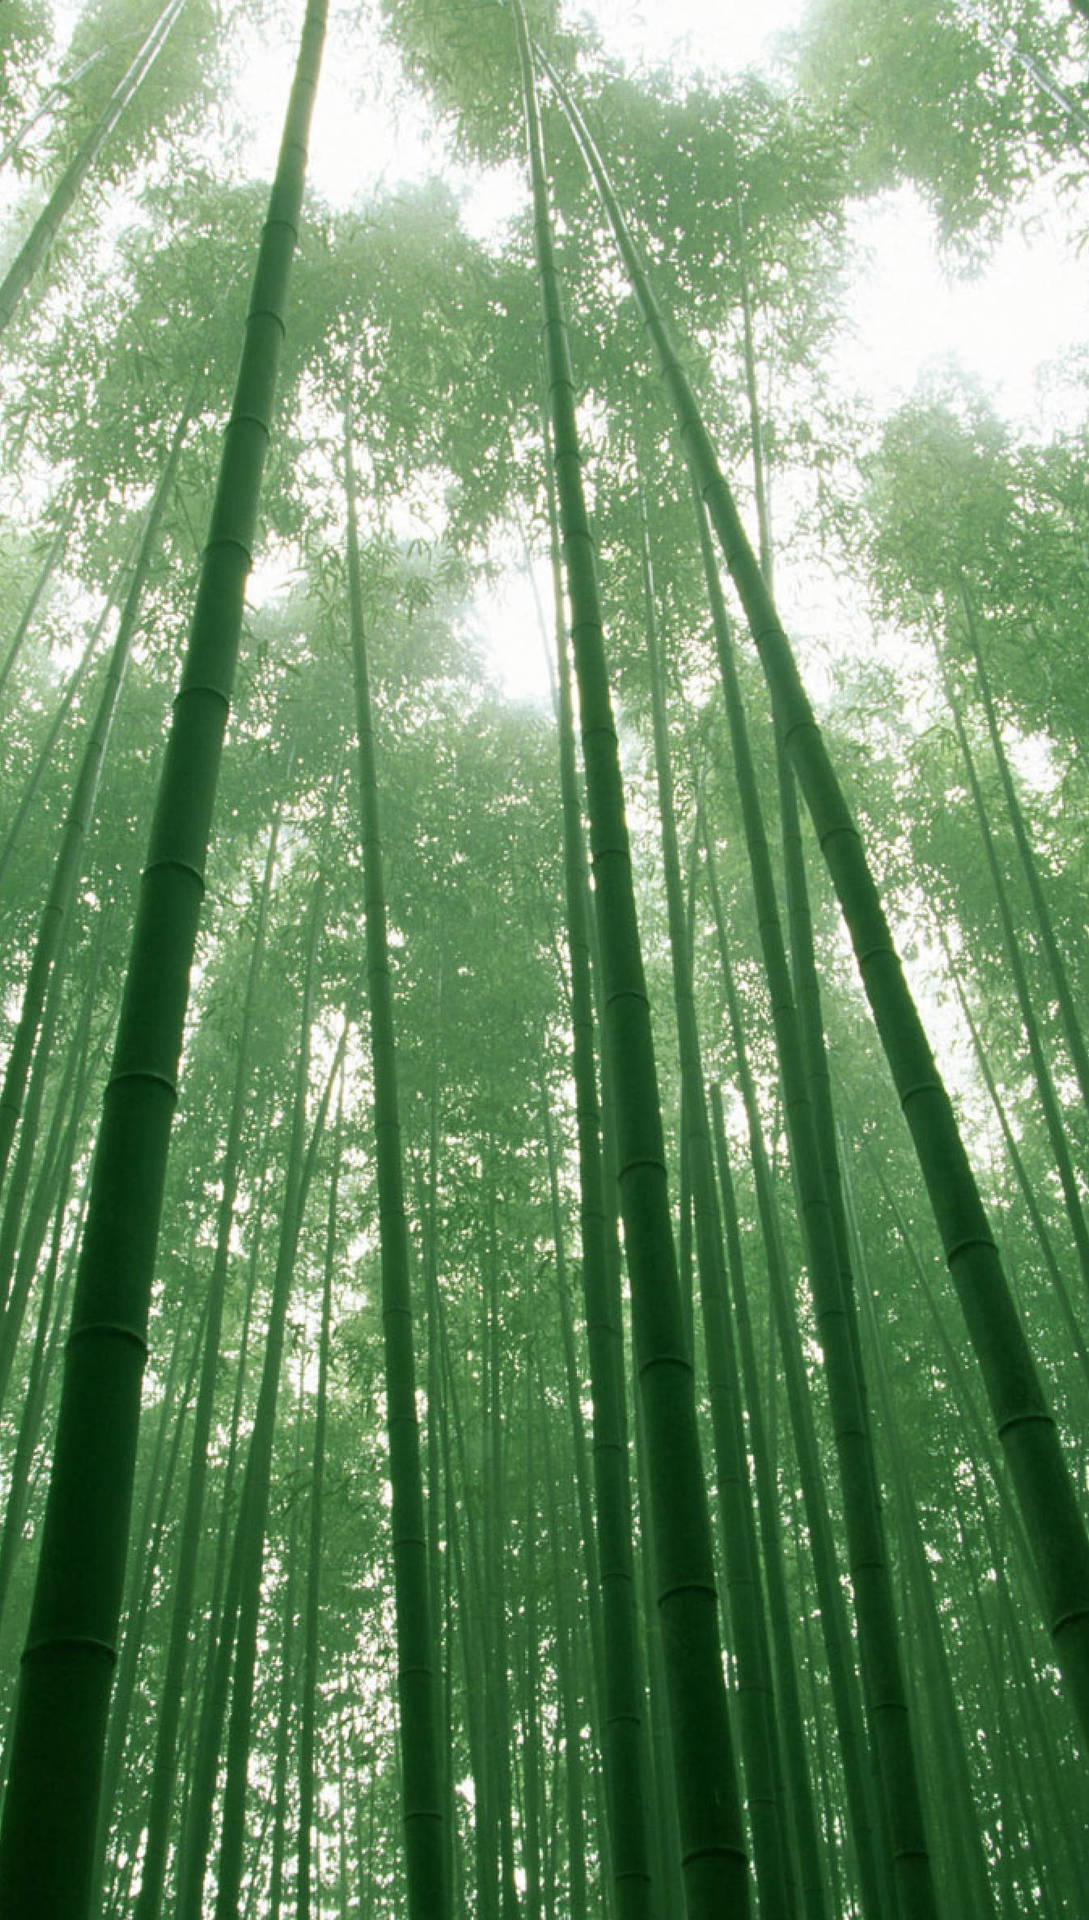 Altobosco Di Bambù Per Iphone. Sfondo